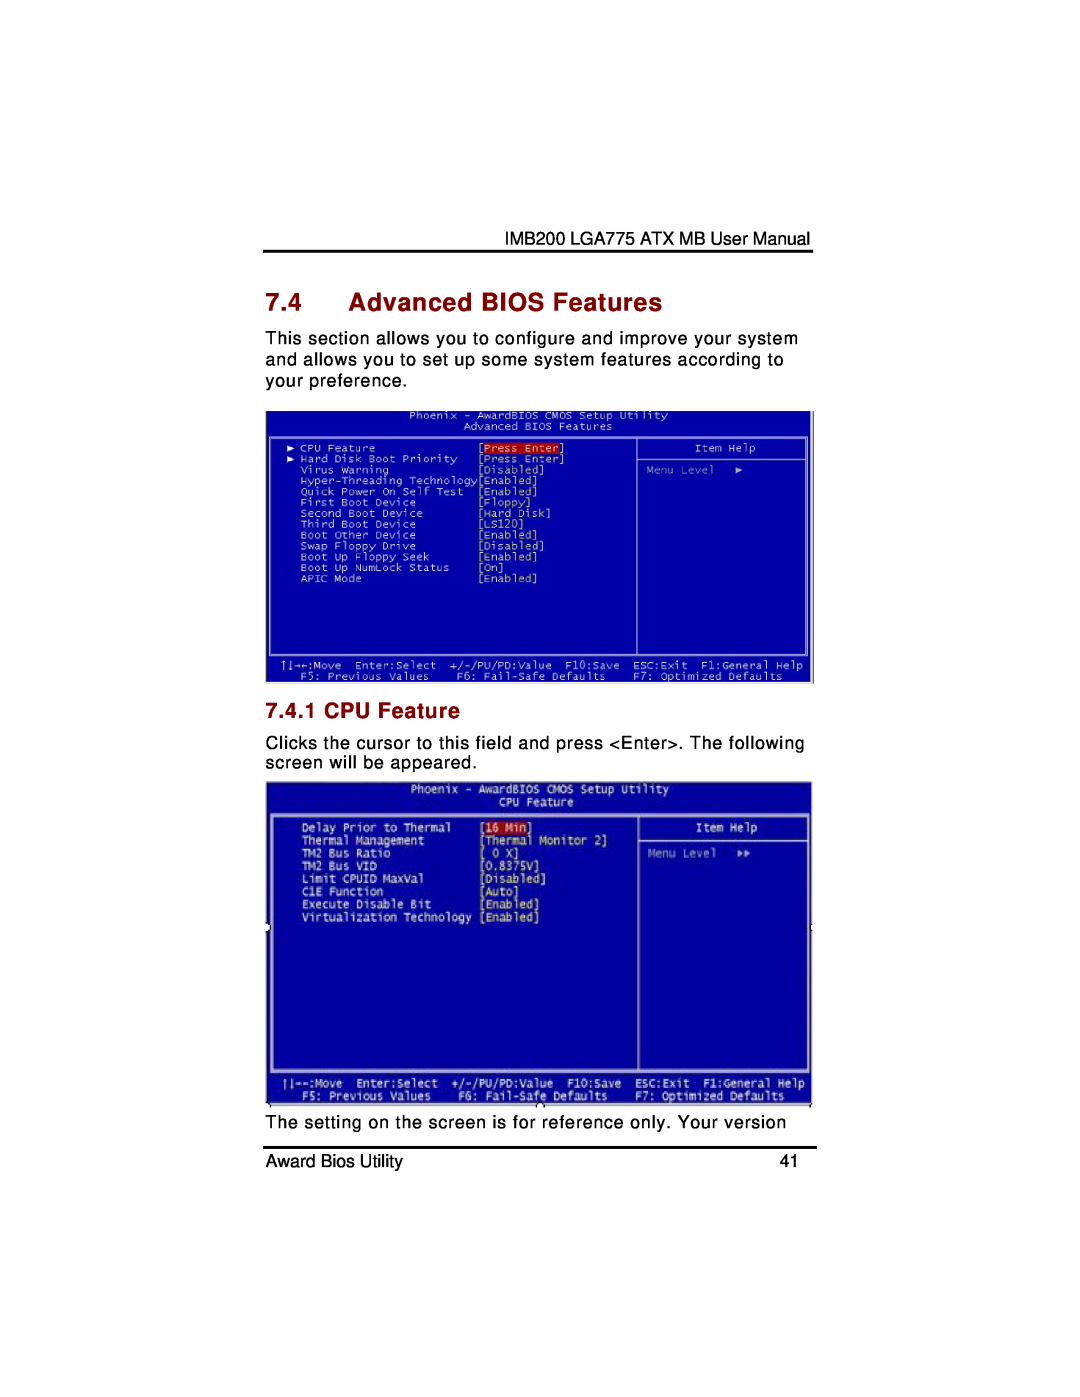 Intel IMB200VGE user manual Advanced BIOS Features, CPU Feature 